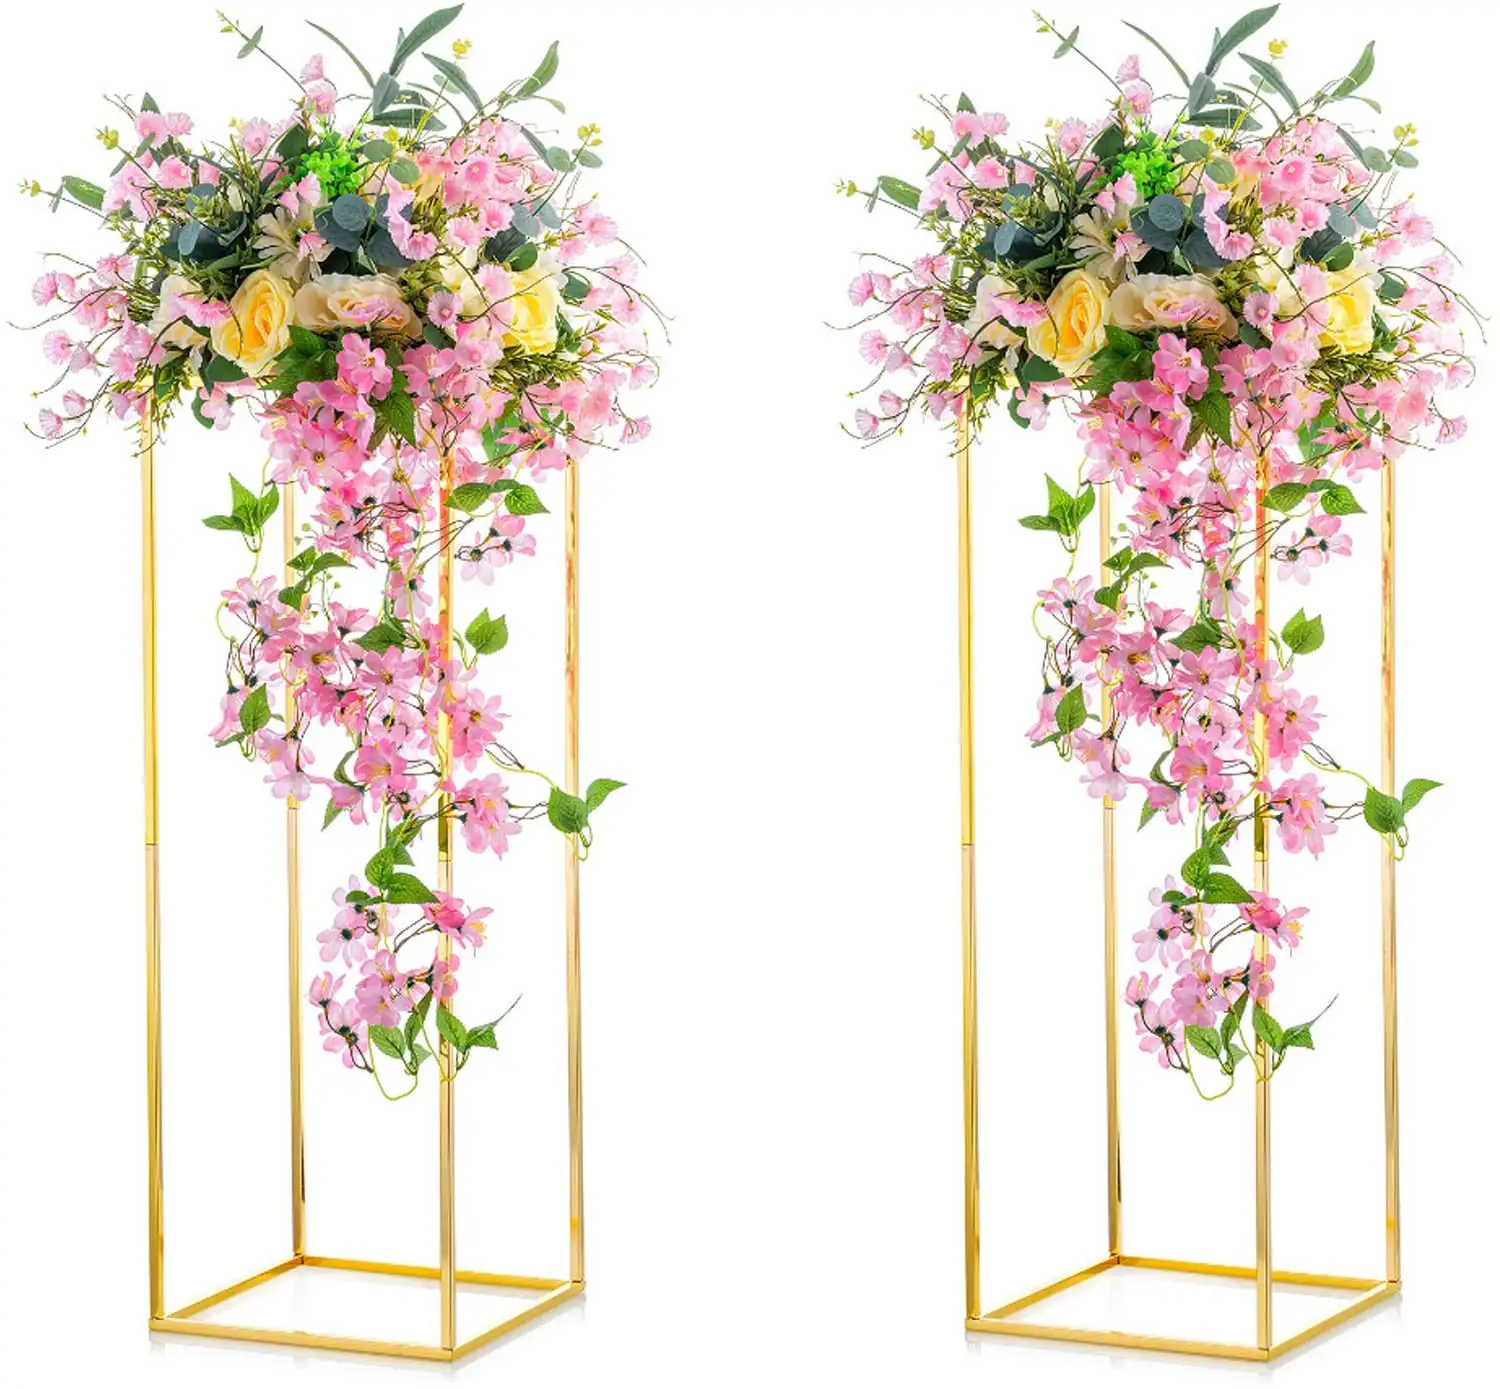 Hintcan gold vases for wedding centerpiece tables metal flower floor vase column flower stand set for home party wedding decor